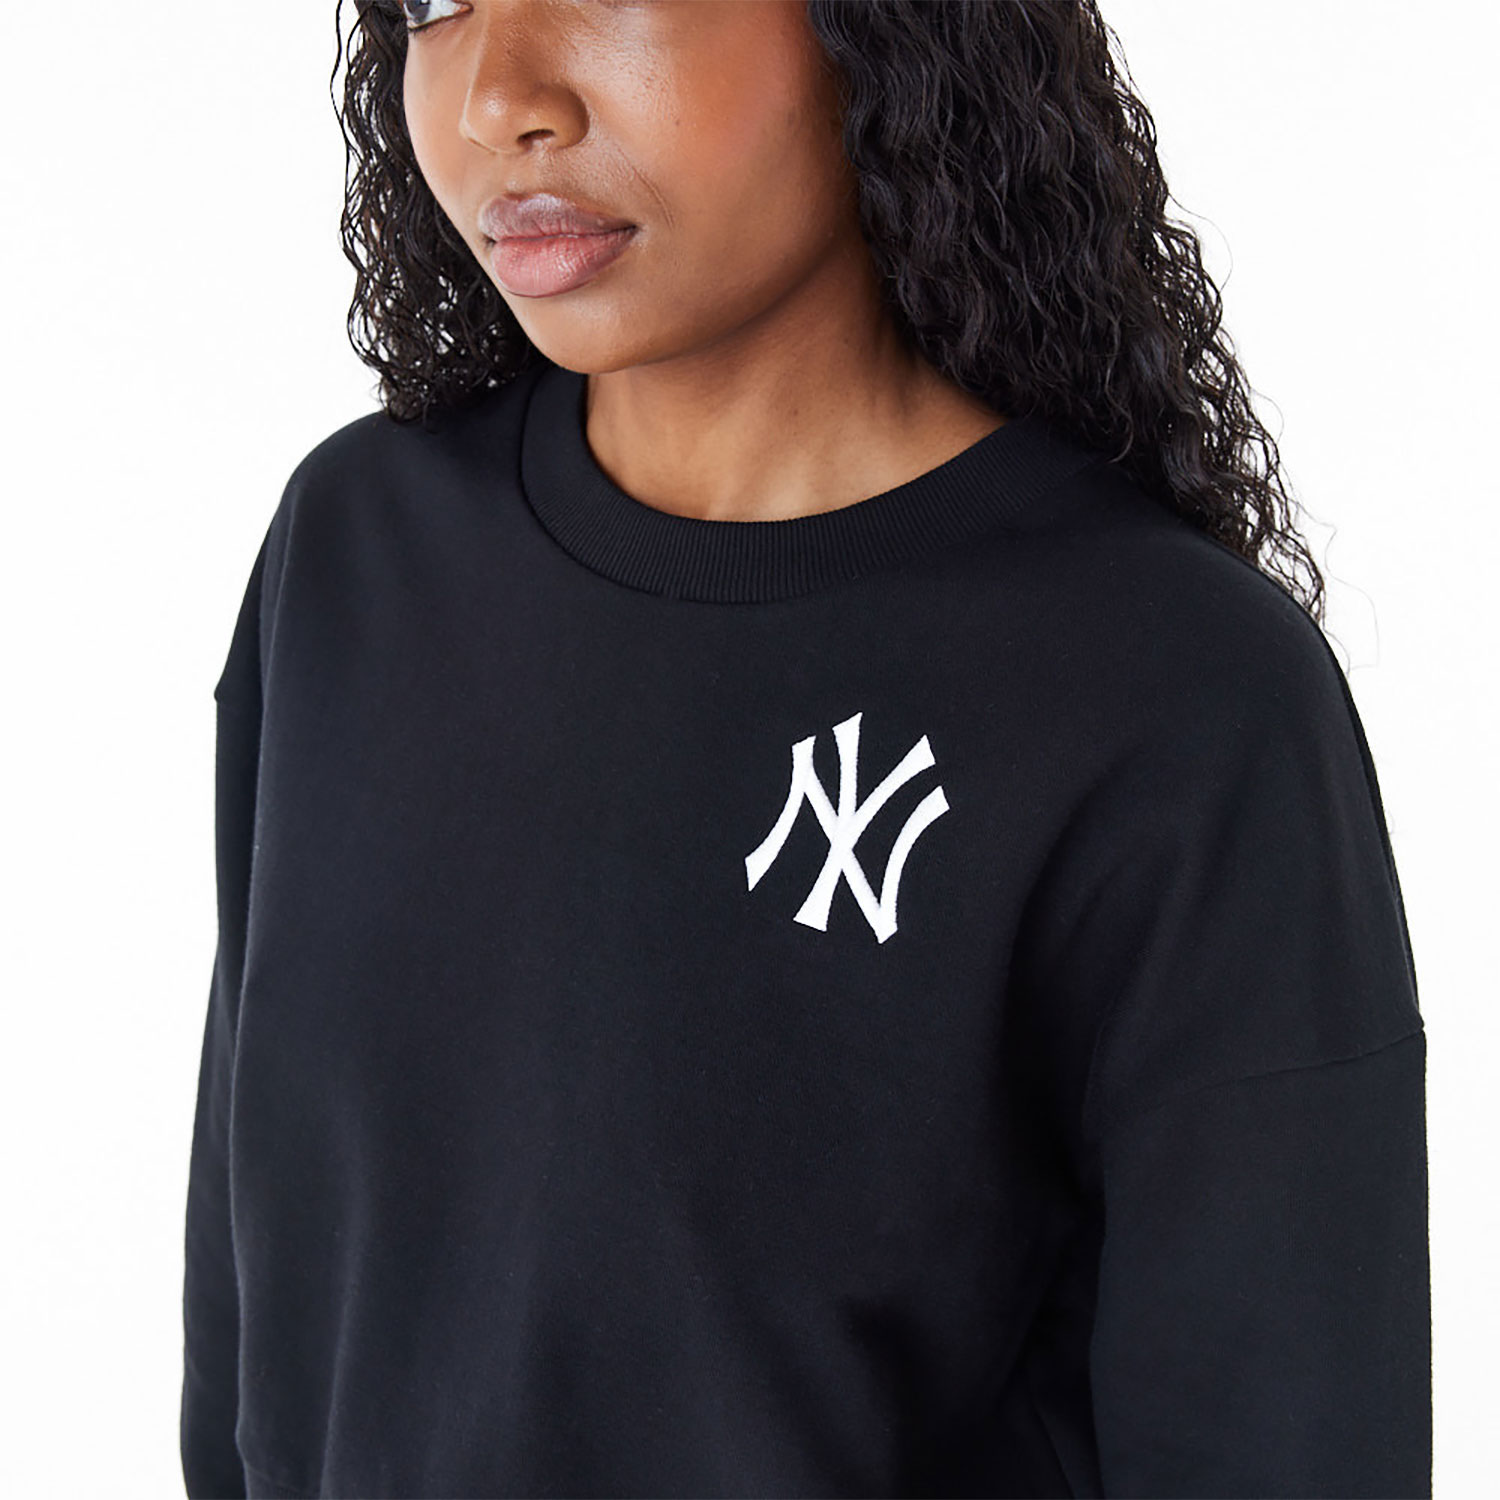 New York Yankees Womens MLB Lifestyle Black Crop Crew Neck Sweatshirt